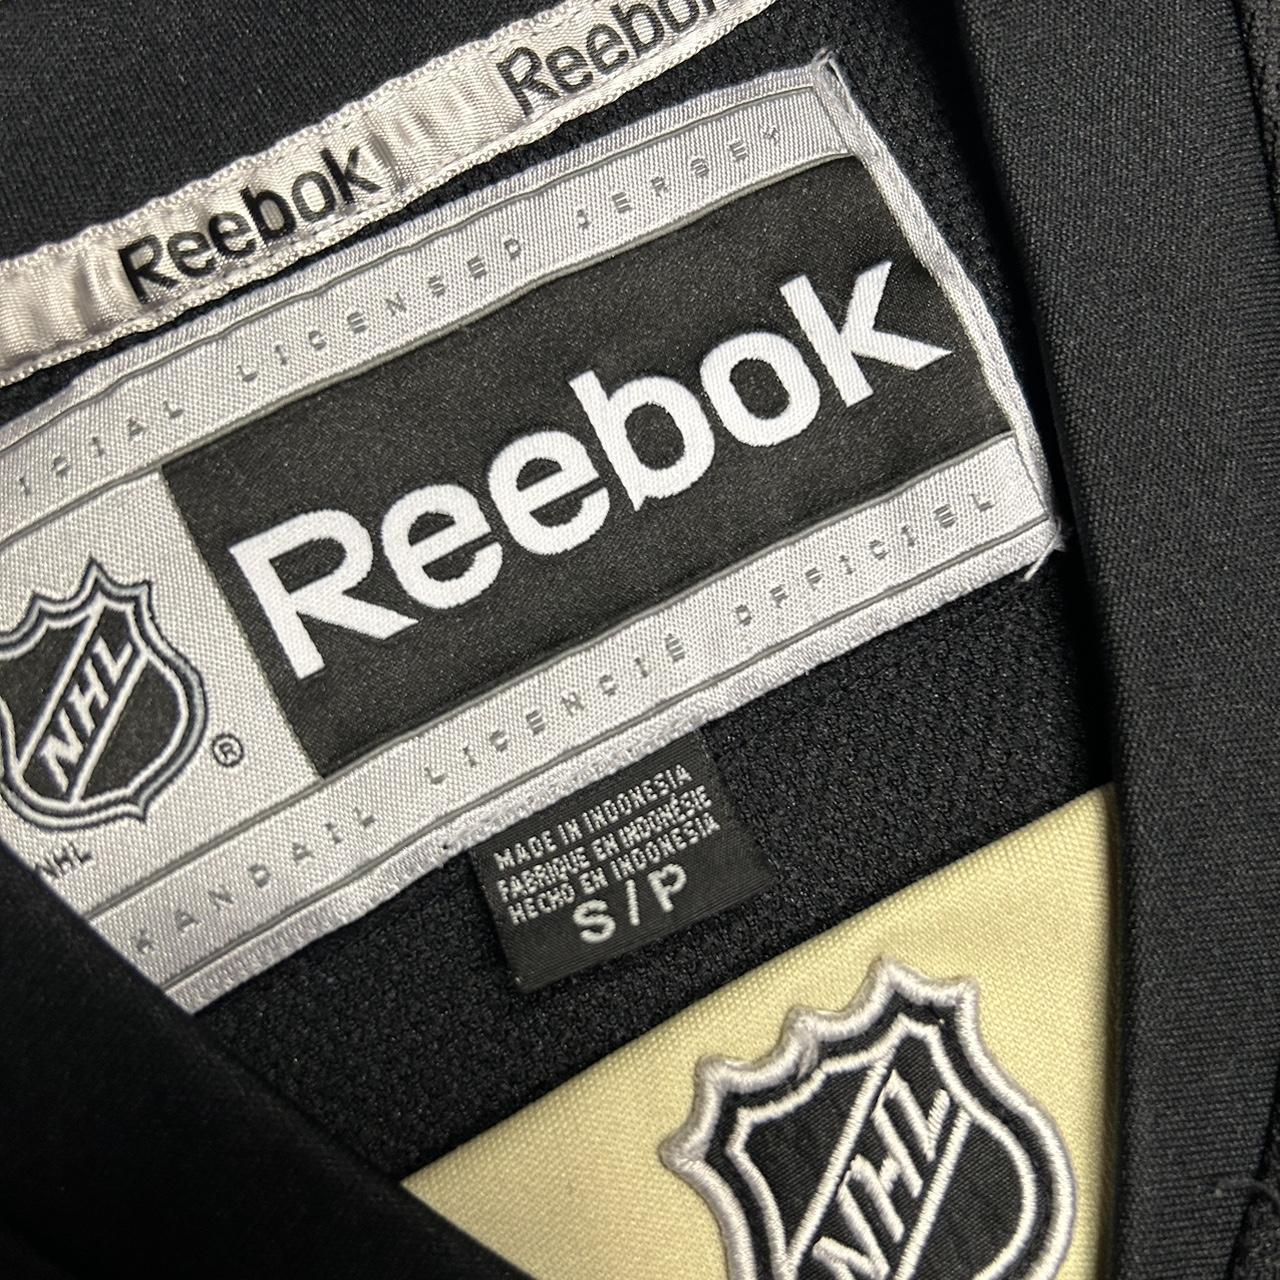 Pittsburgh Penguins Evgeni Malkin Jersey Reebok - Depop